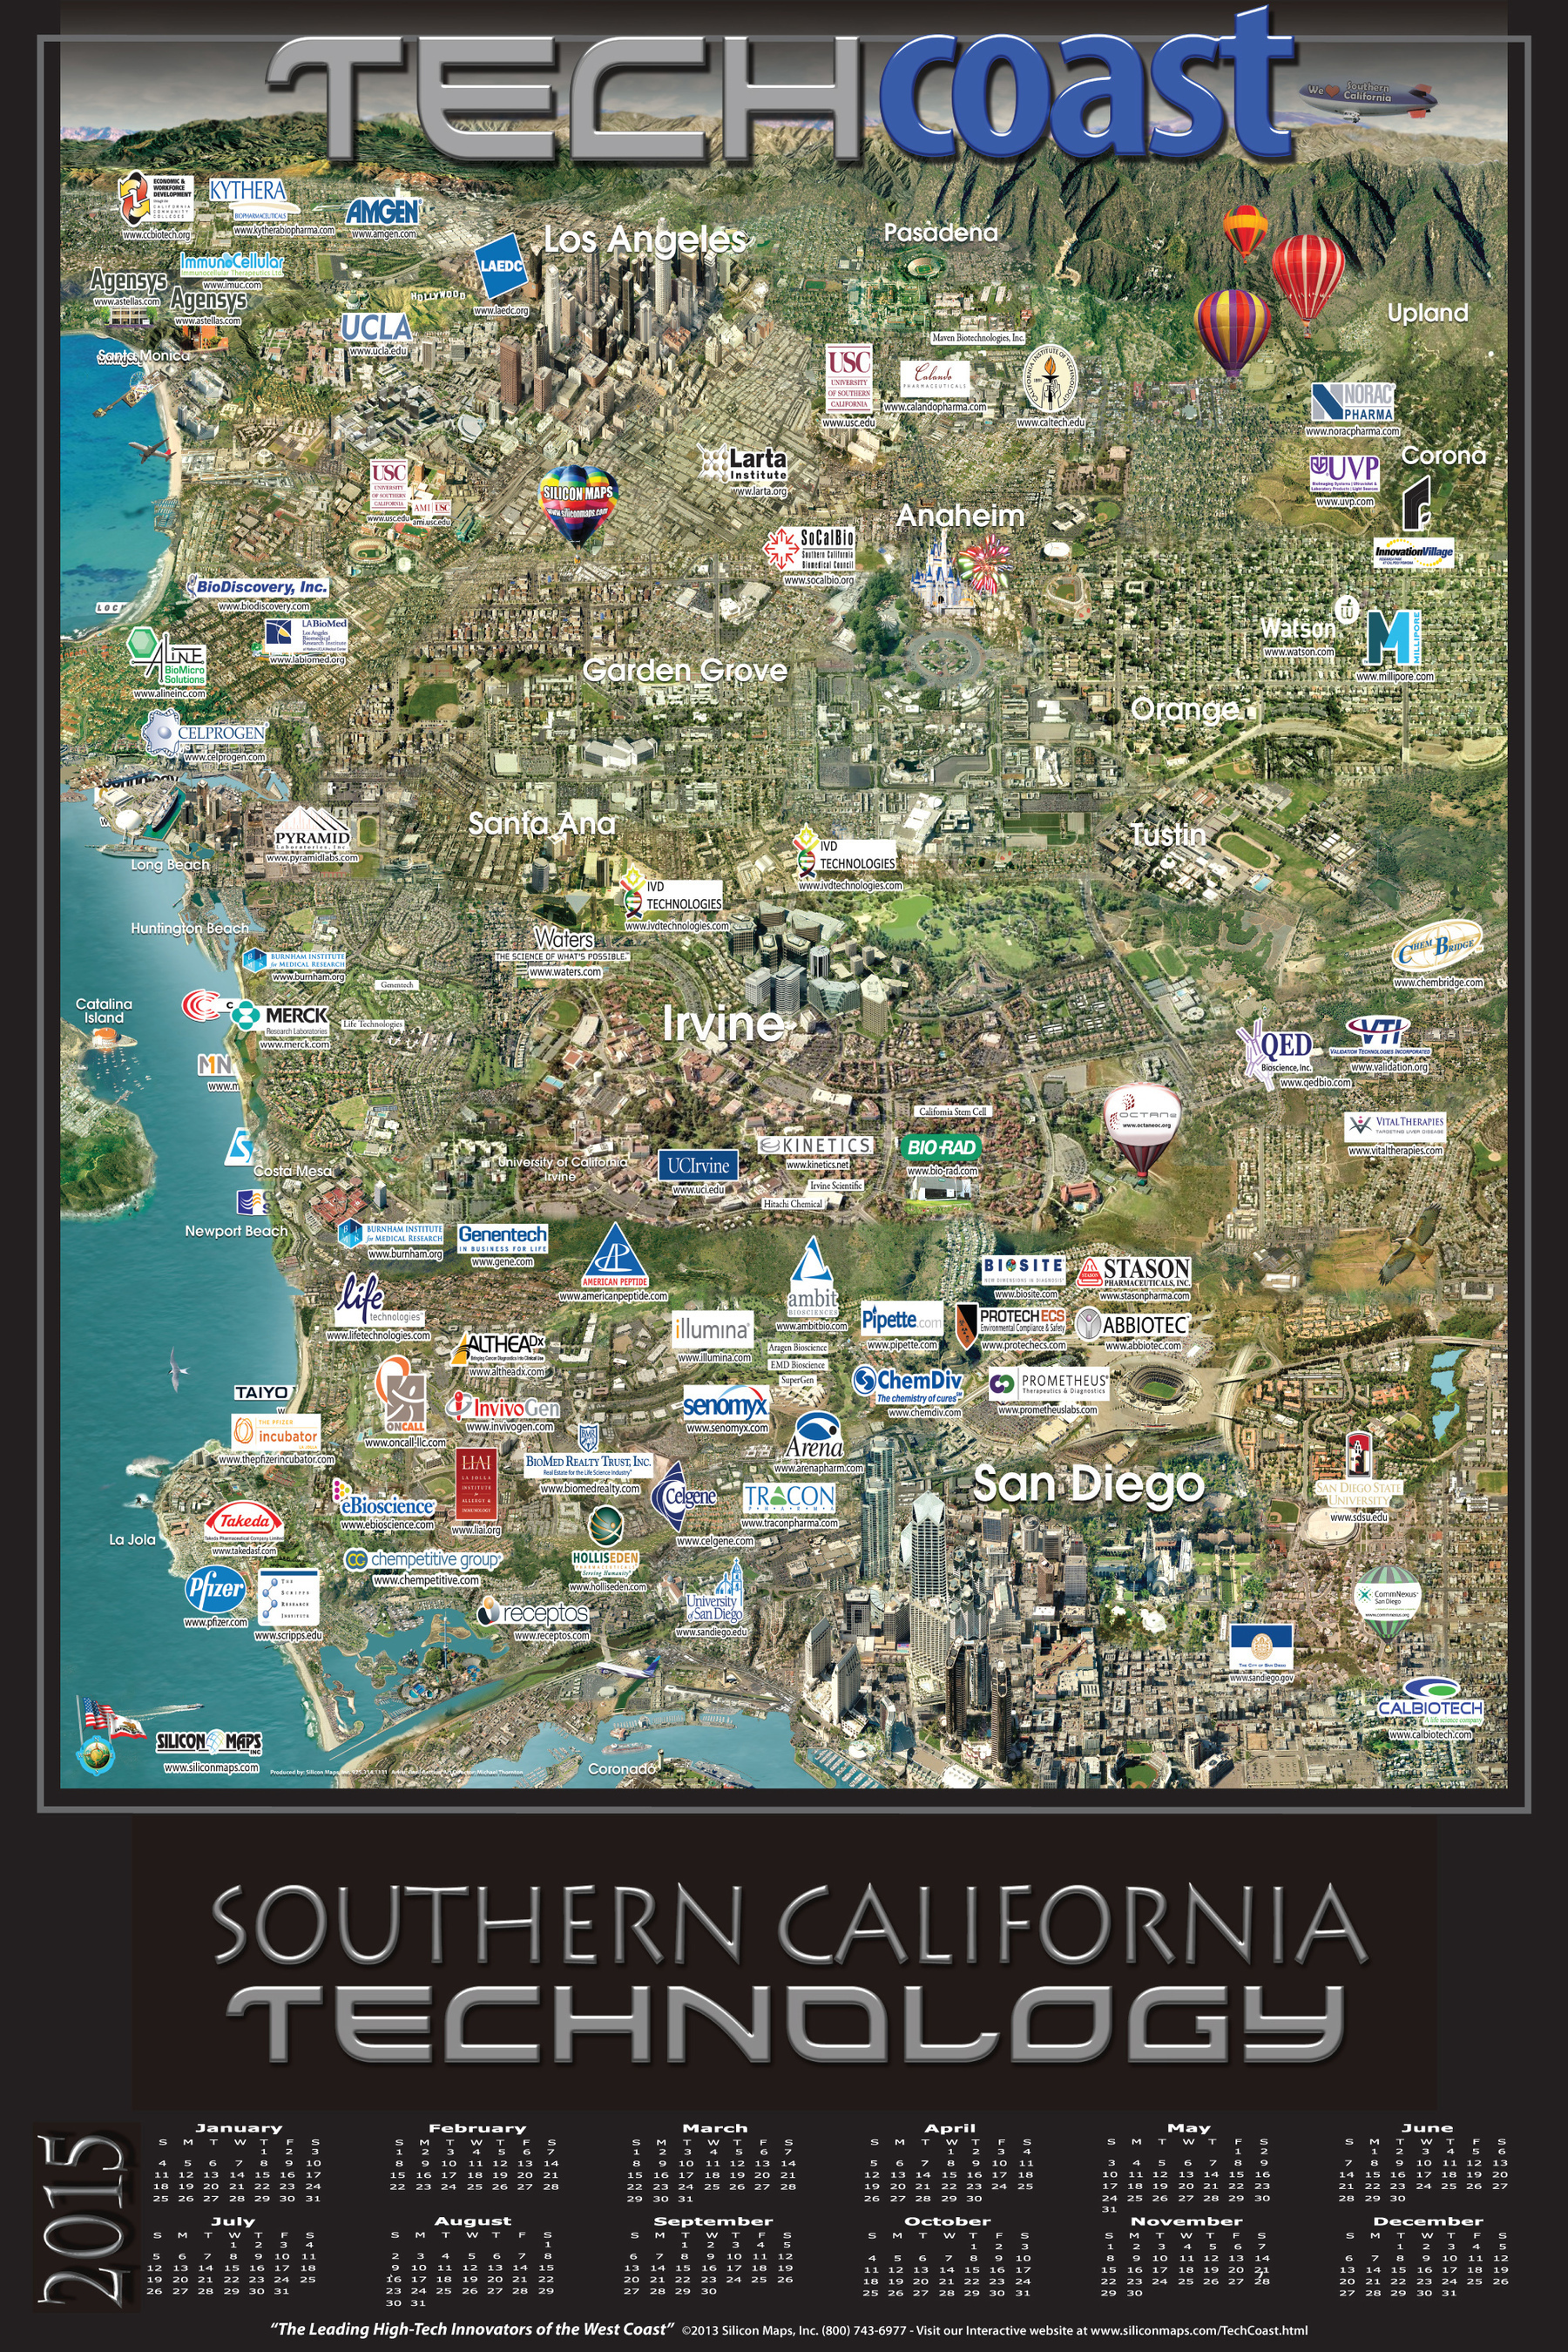 Tech Coast - Silicon Beach - Southern California Technology (PRNewsFoto/Silicon Maps, Inc.)